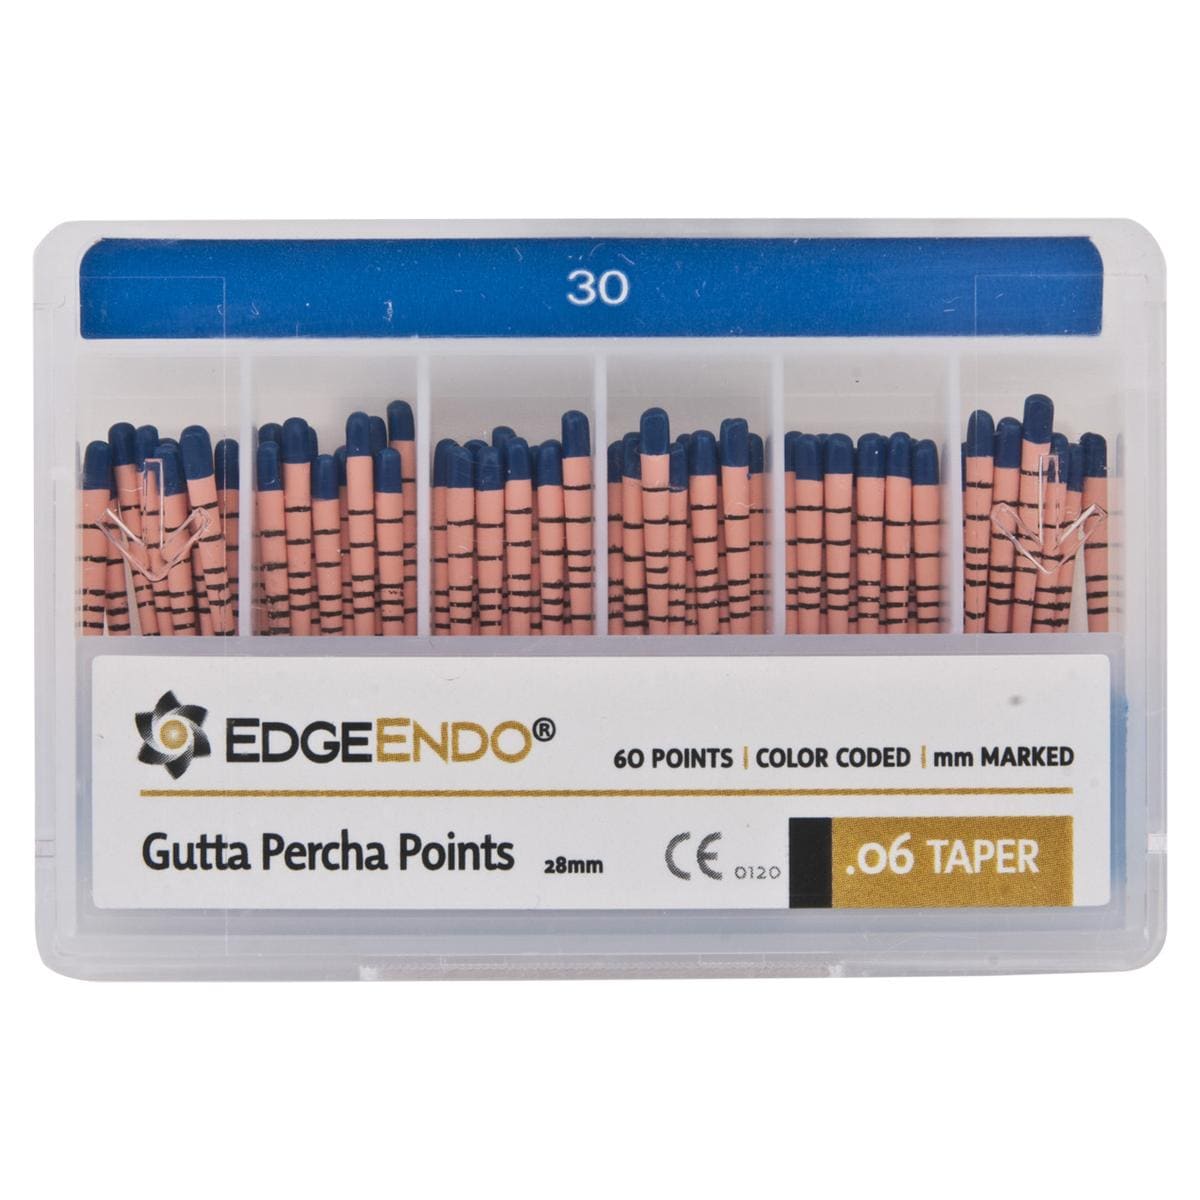 EdgeFile X7 Guttaperchaspitzen - Taper 06, ISO 030, blau, Packung 60 Stück